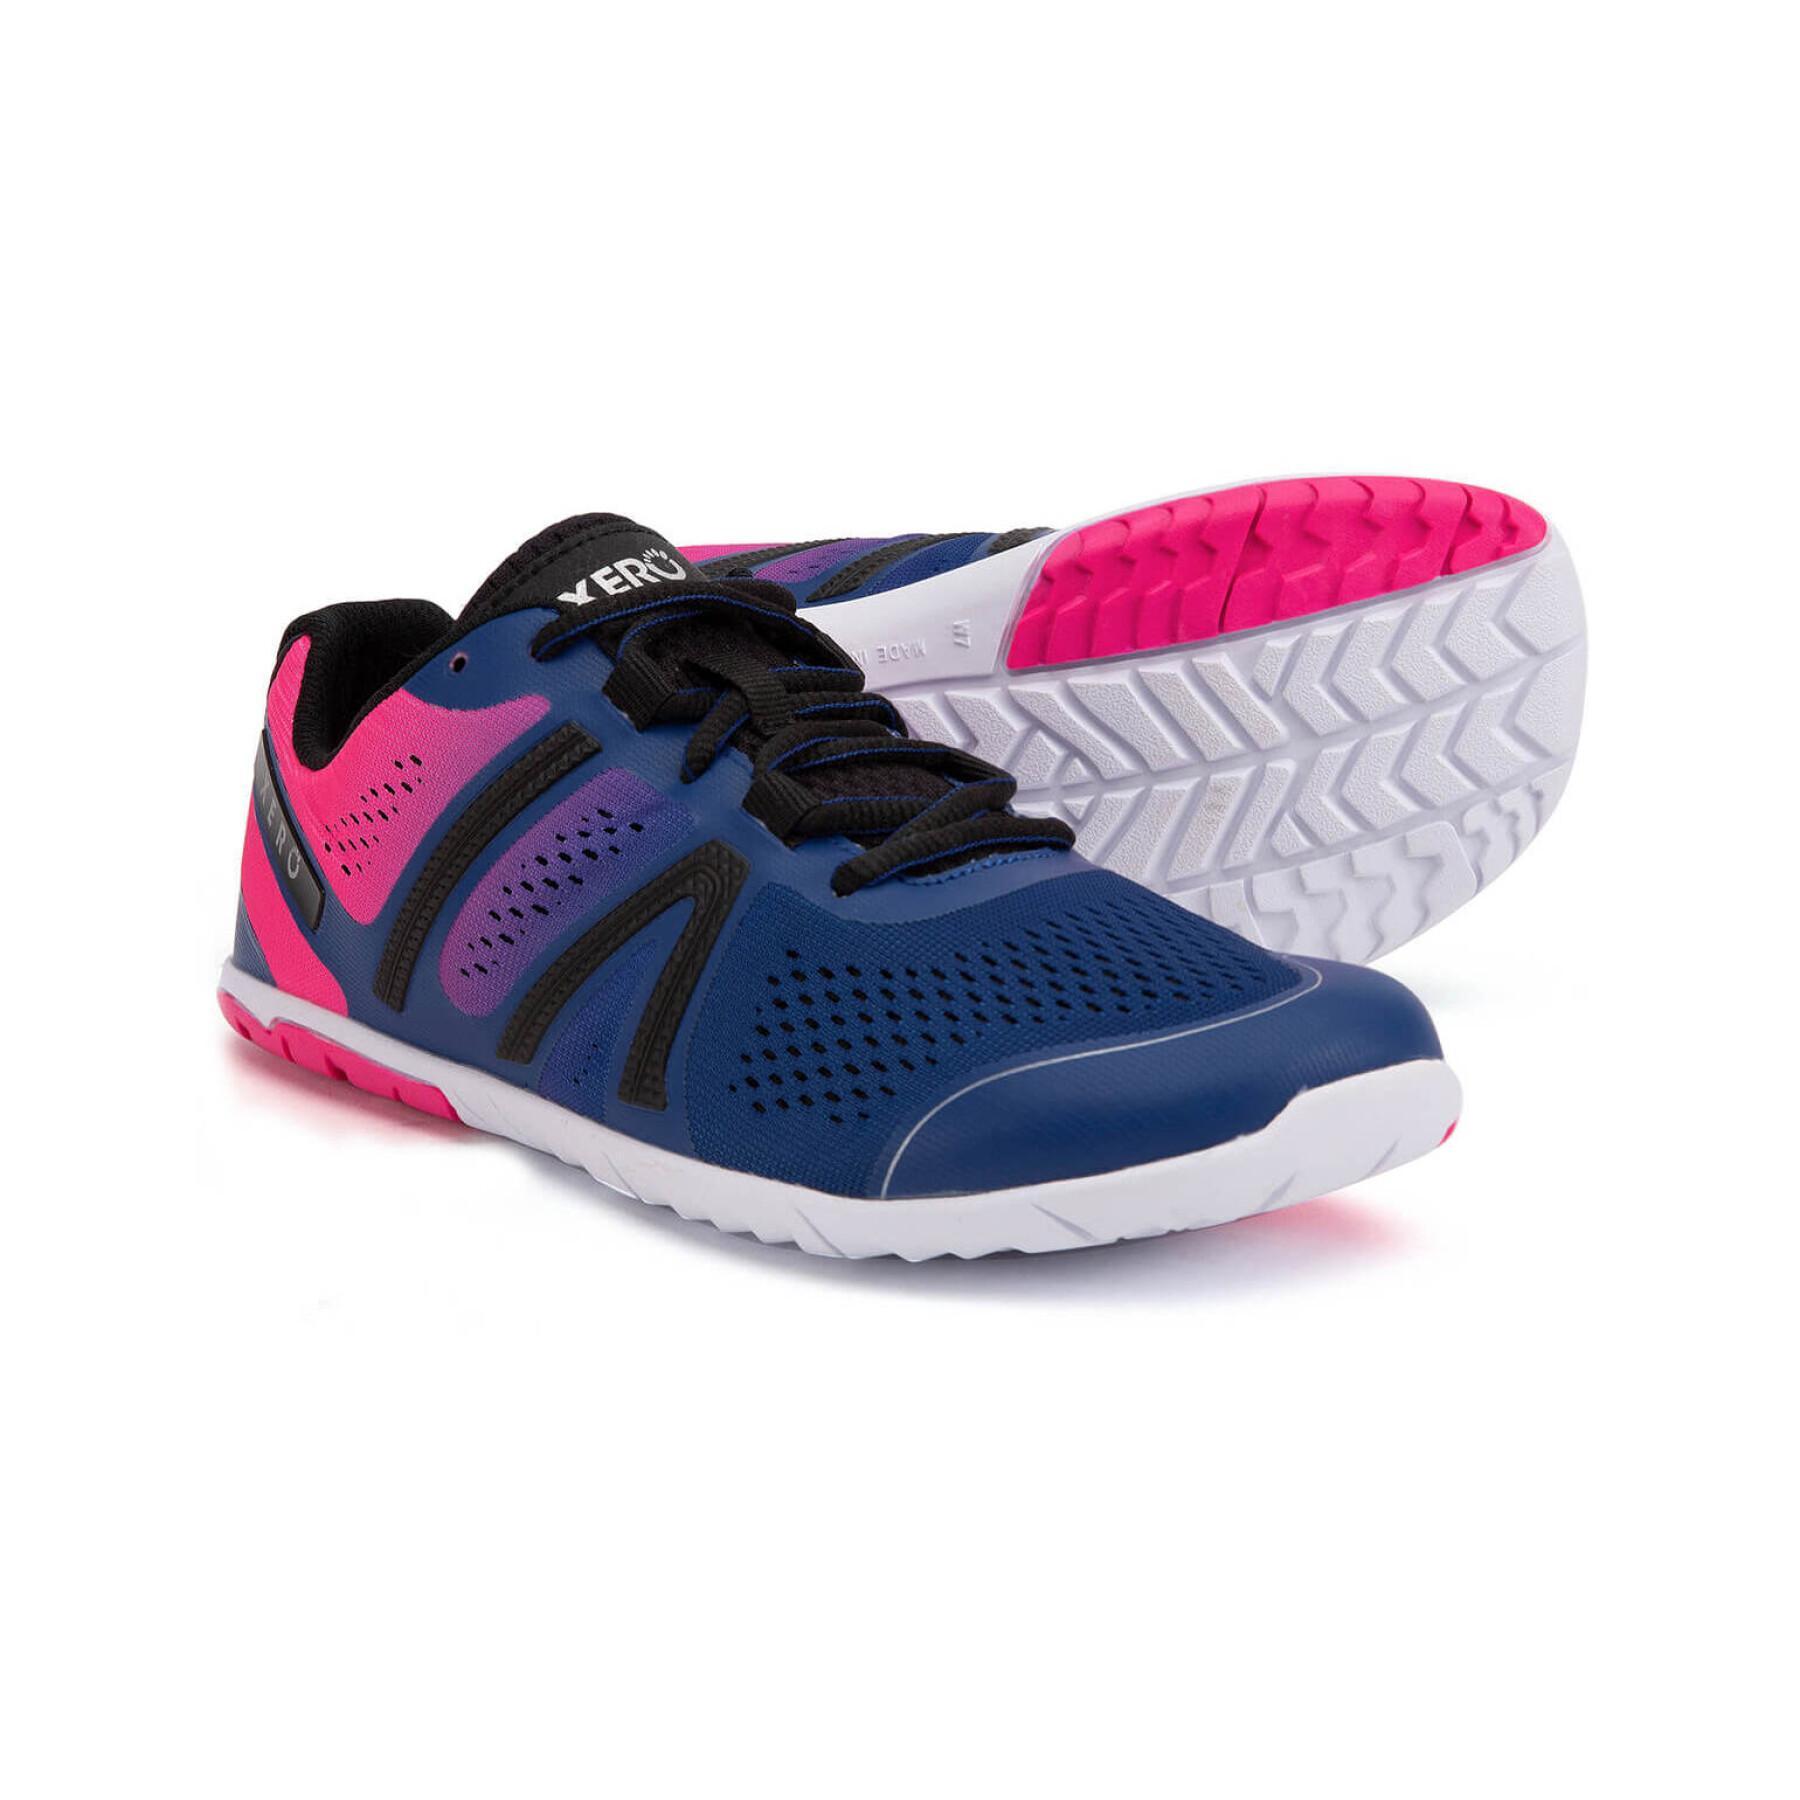 Chaussures de running femme Xero Shoes Forza